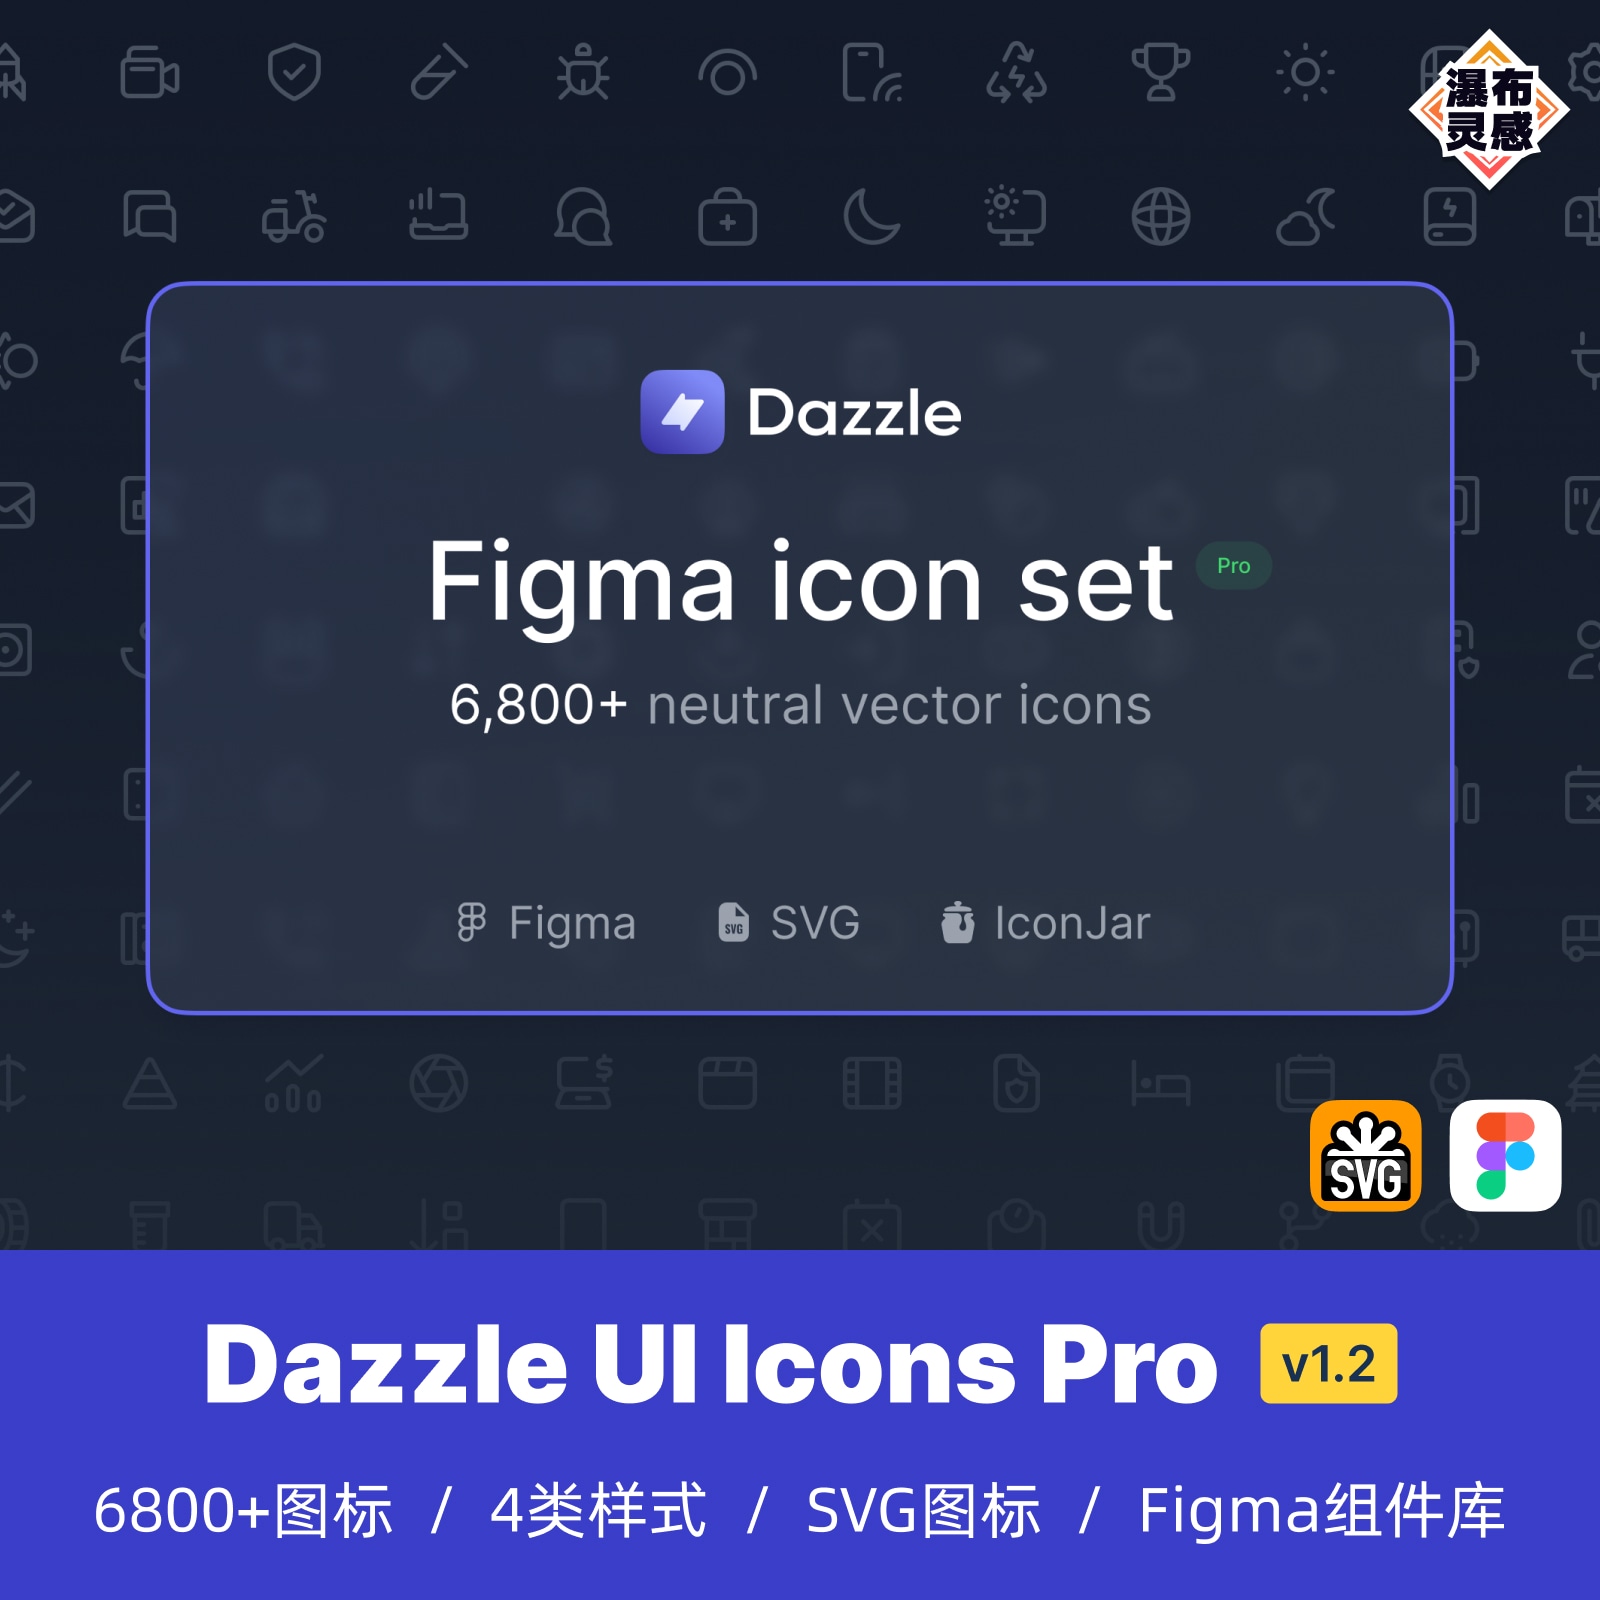 6800+ Figma 精品图标组件库 4套样式 Dazzle UI Icons Pro v1.2